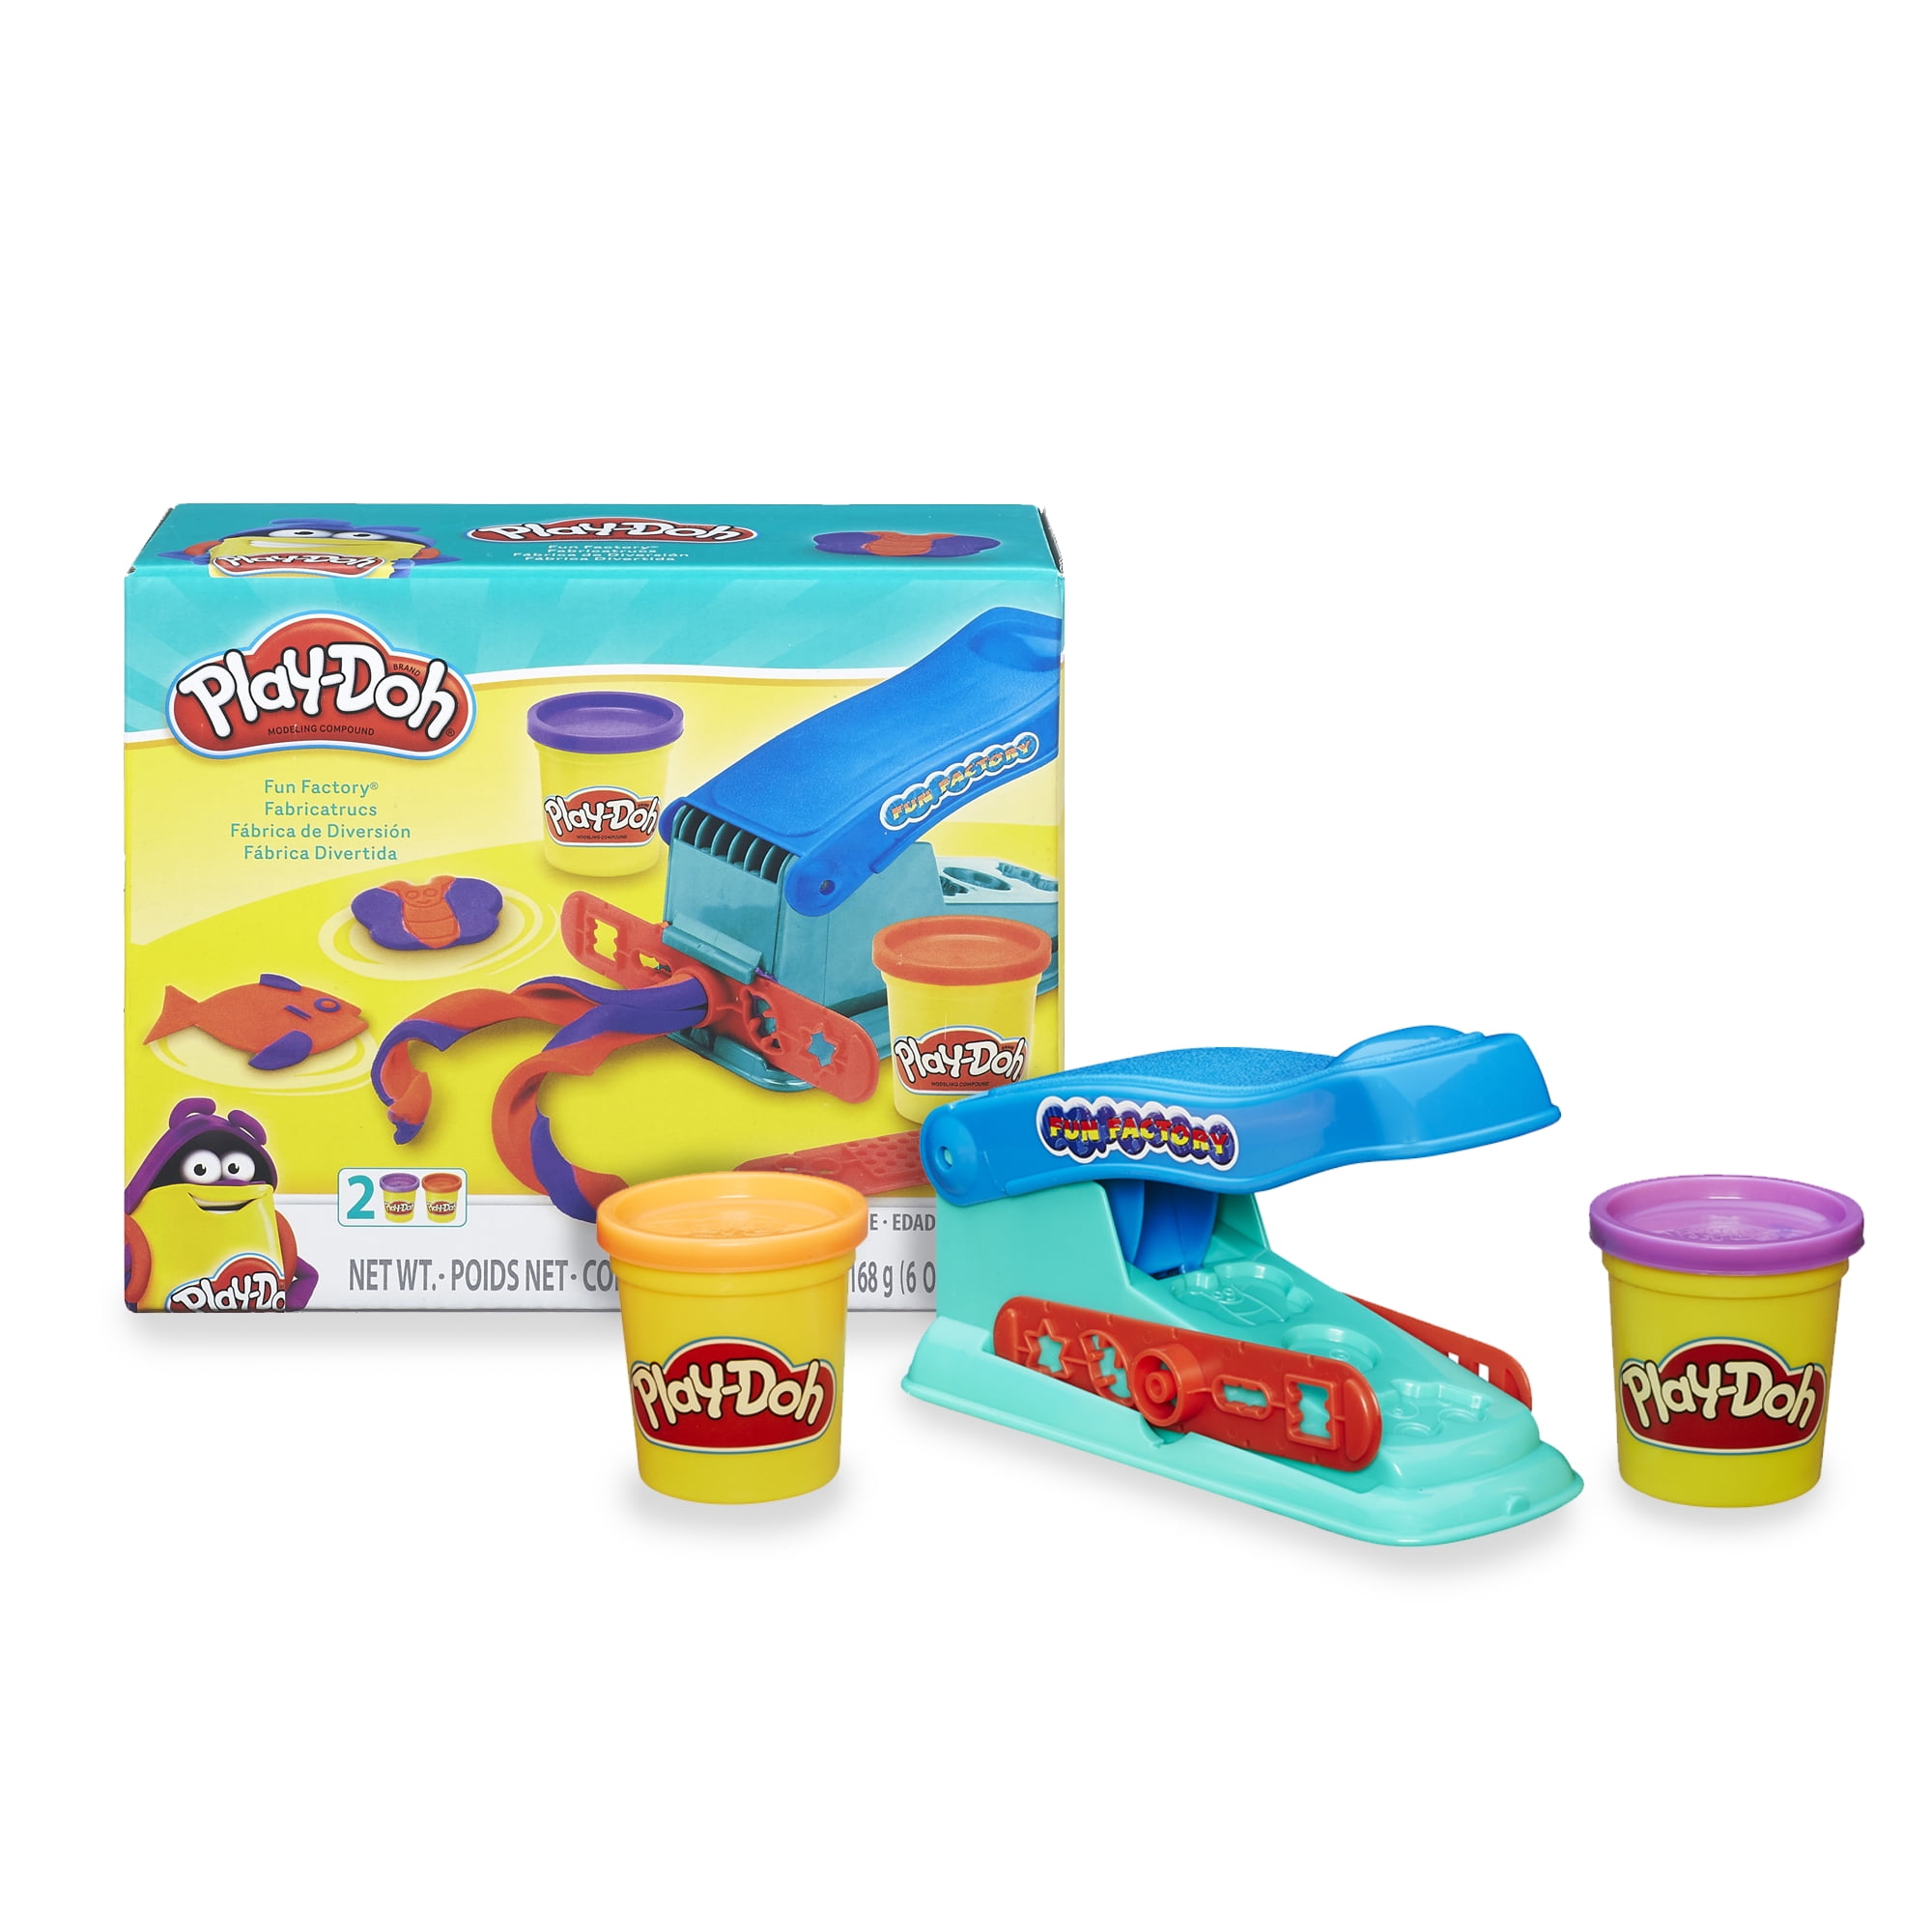 Play-Doh Dough Clay Fun Factory Toy Kids Game Playdough *BRAND NEW* 